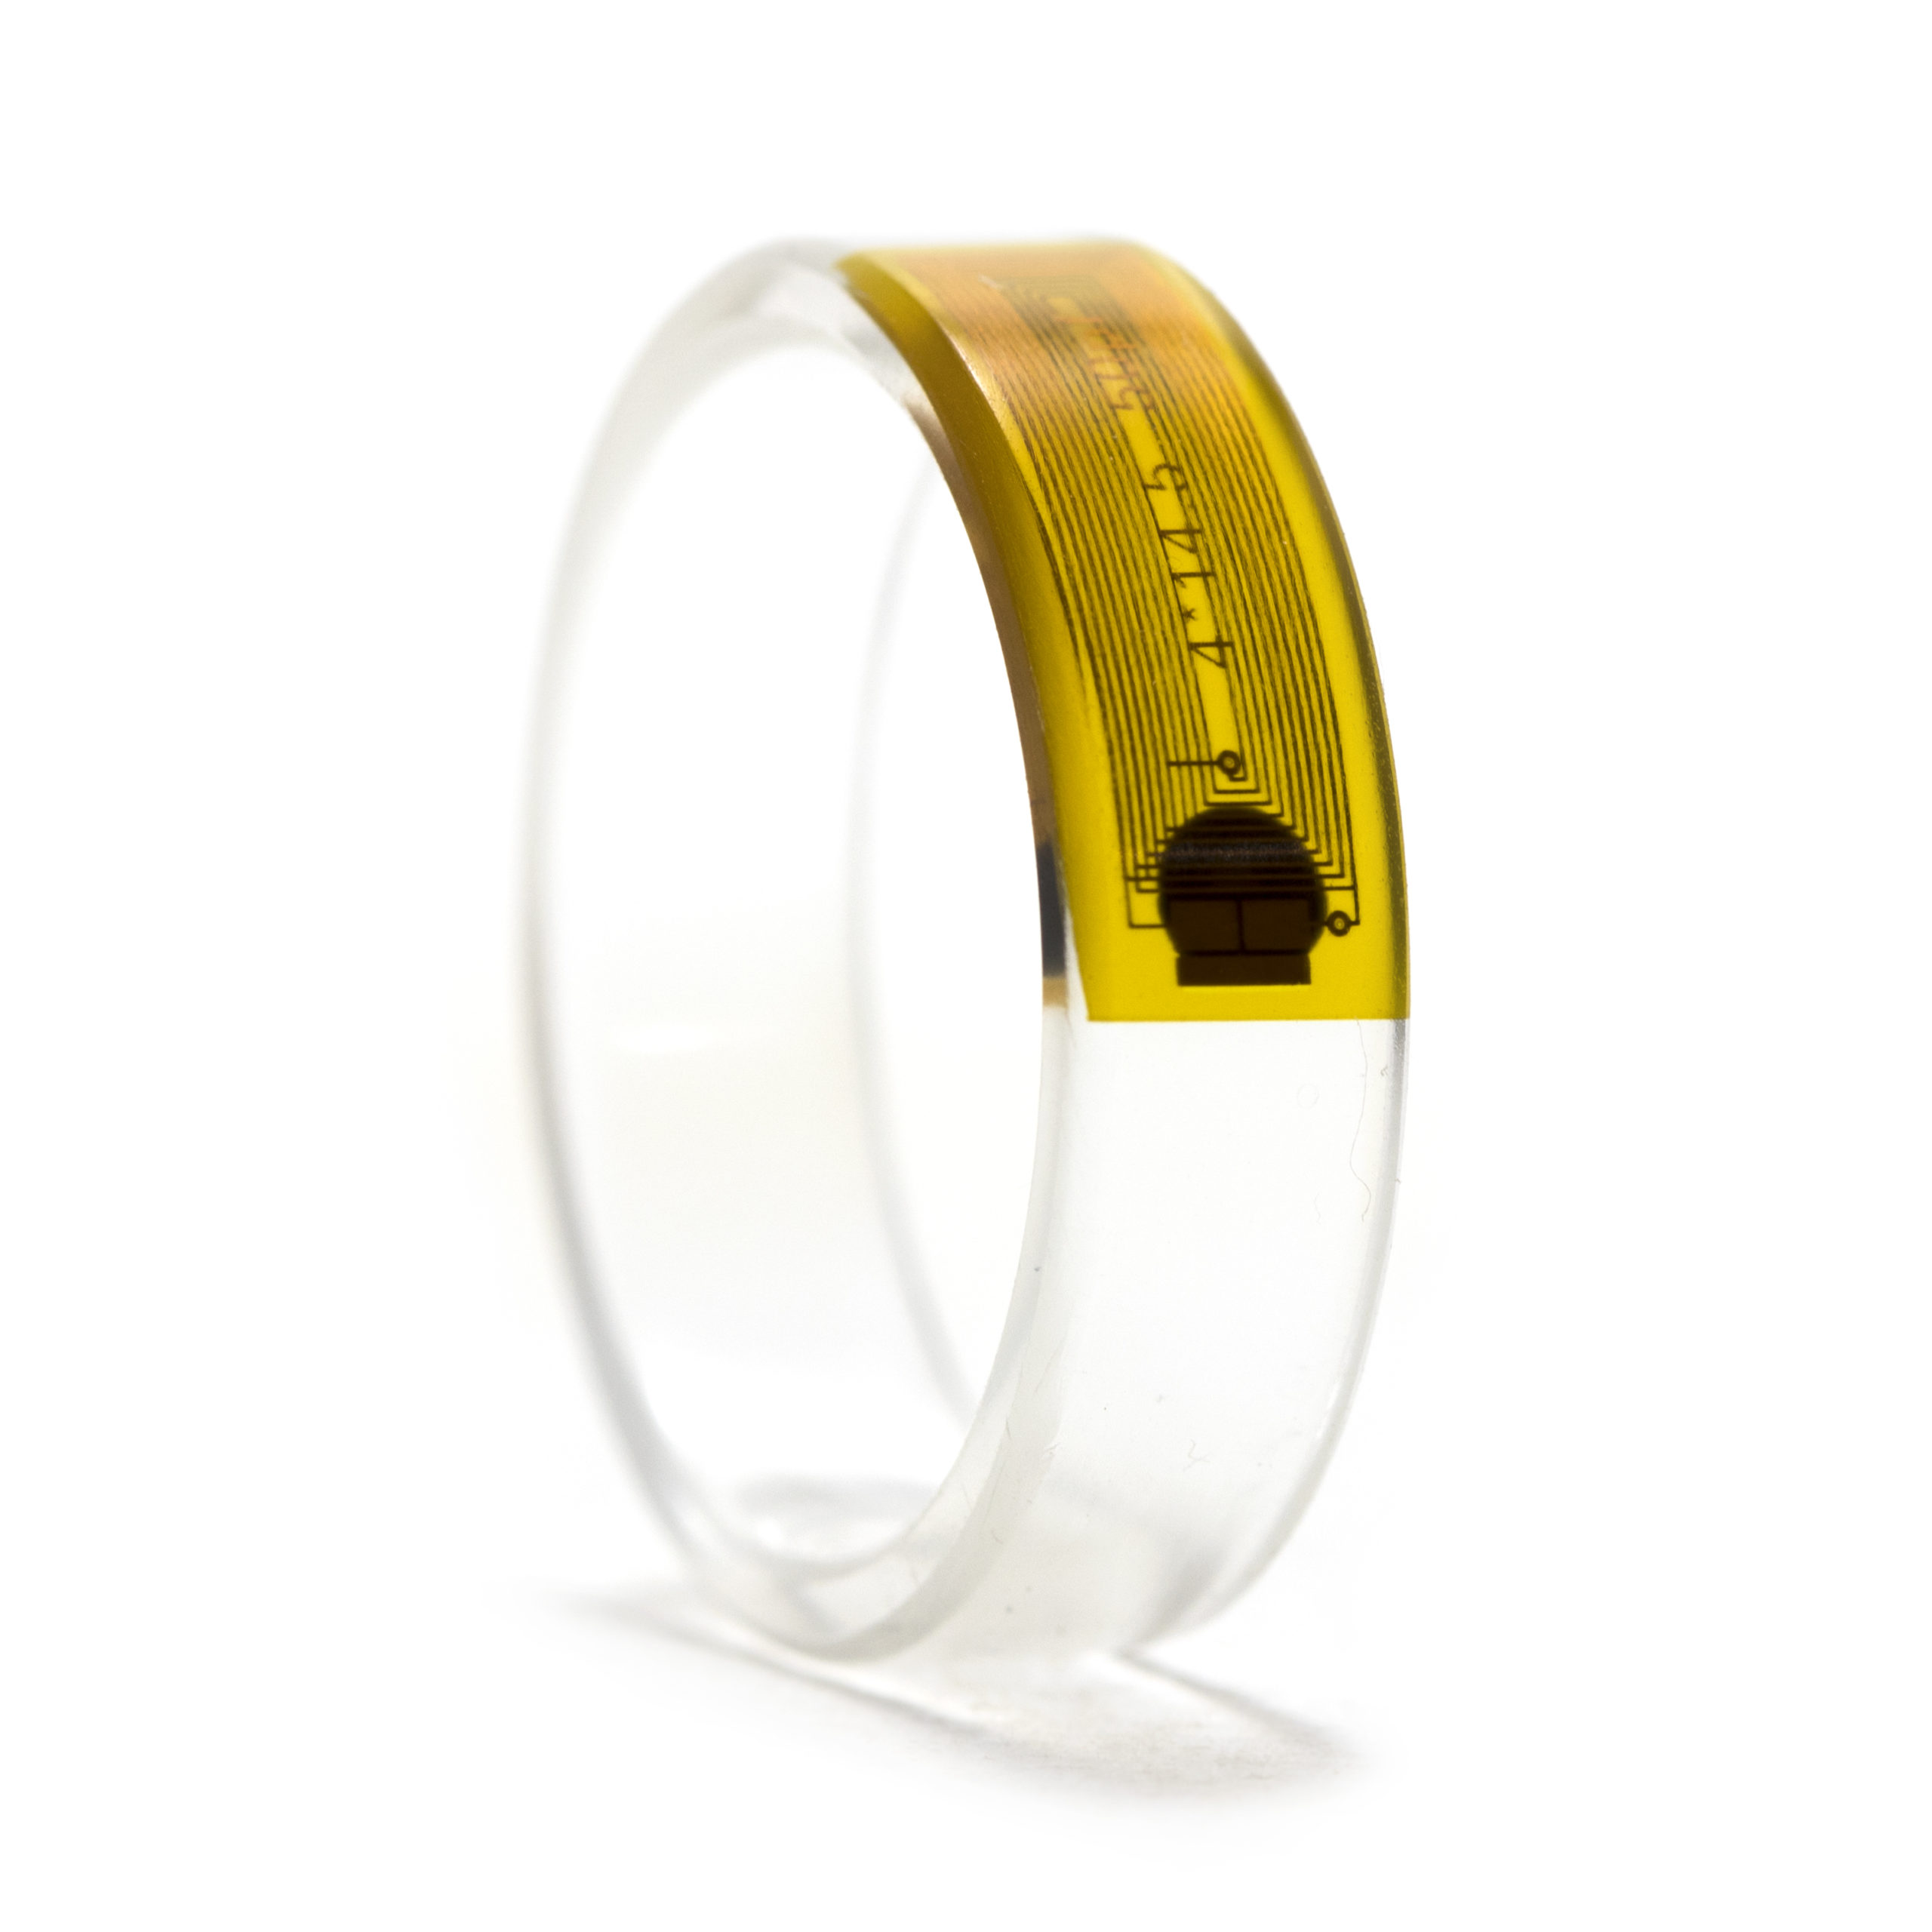 NFC Smart Ring - Warren Rings